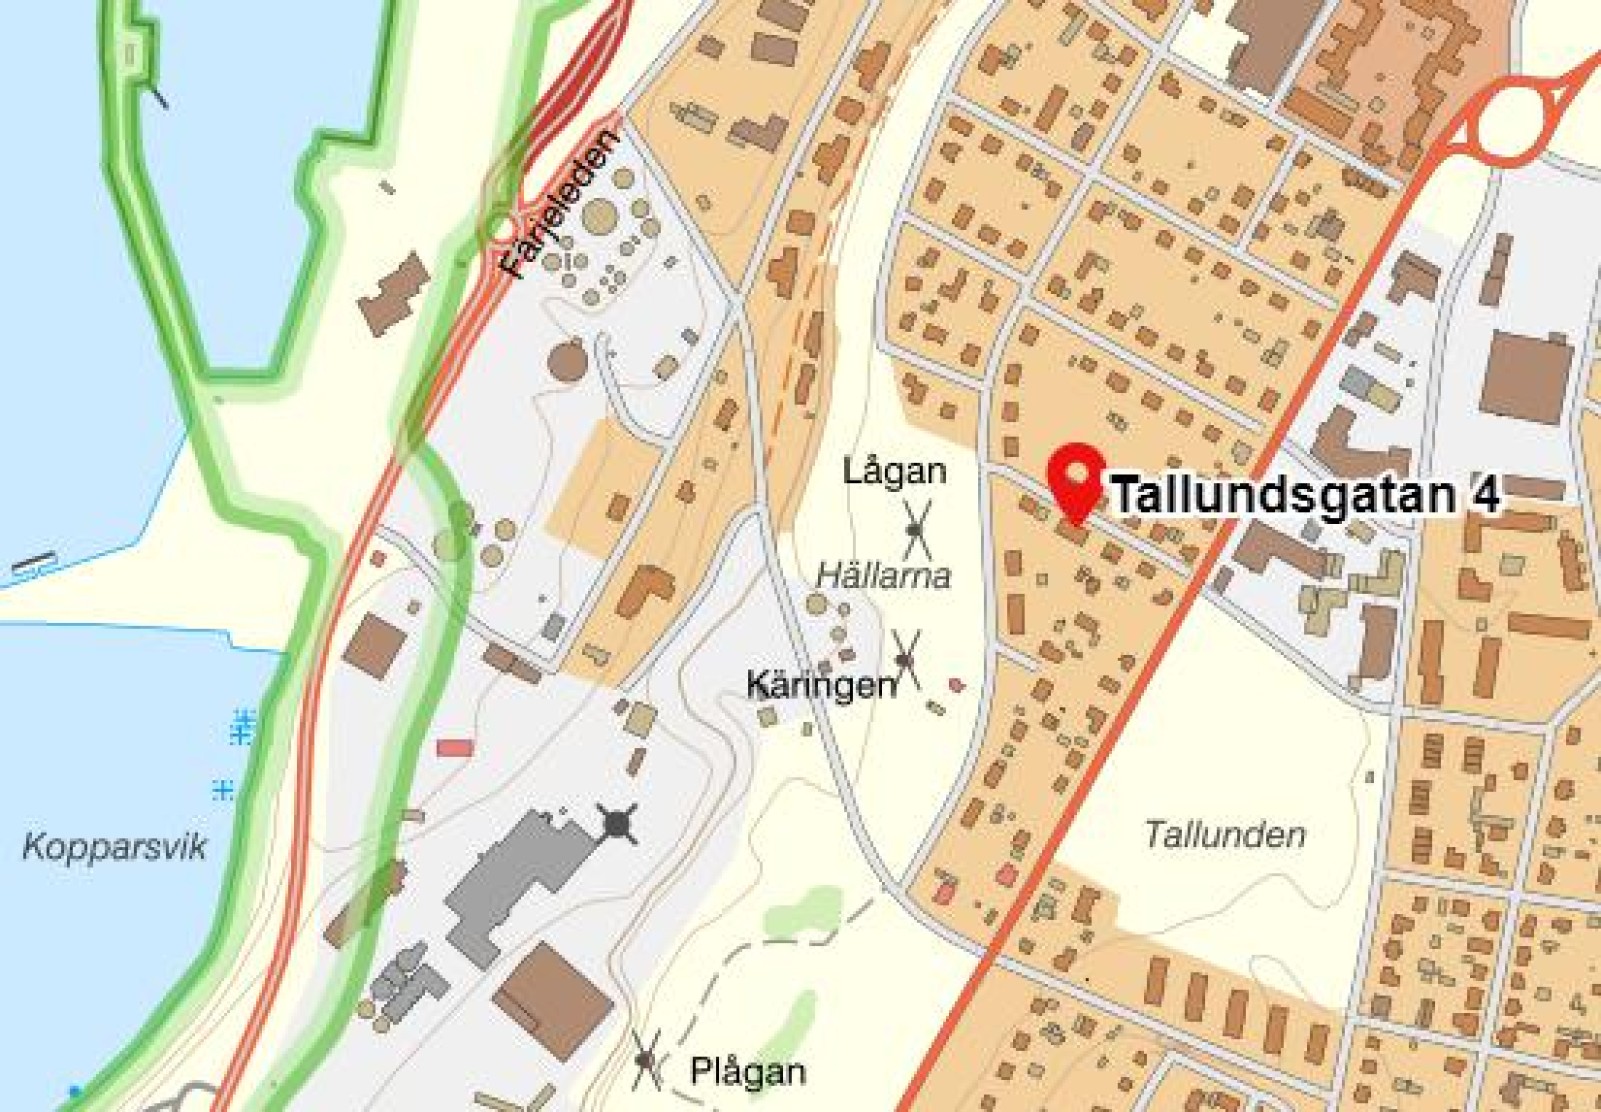  Tallundsgatan 4